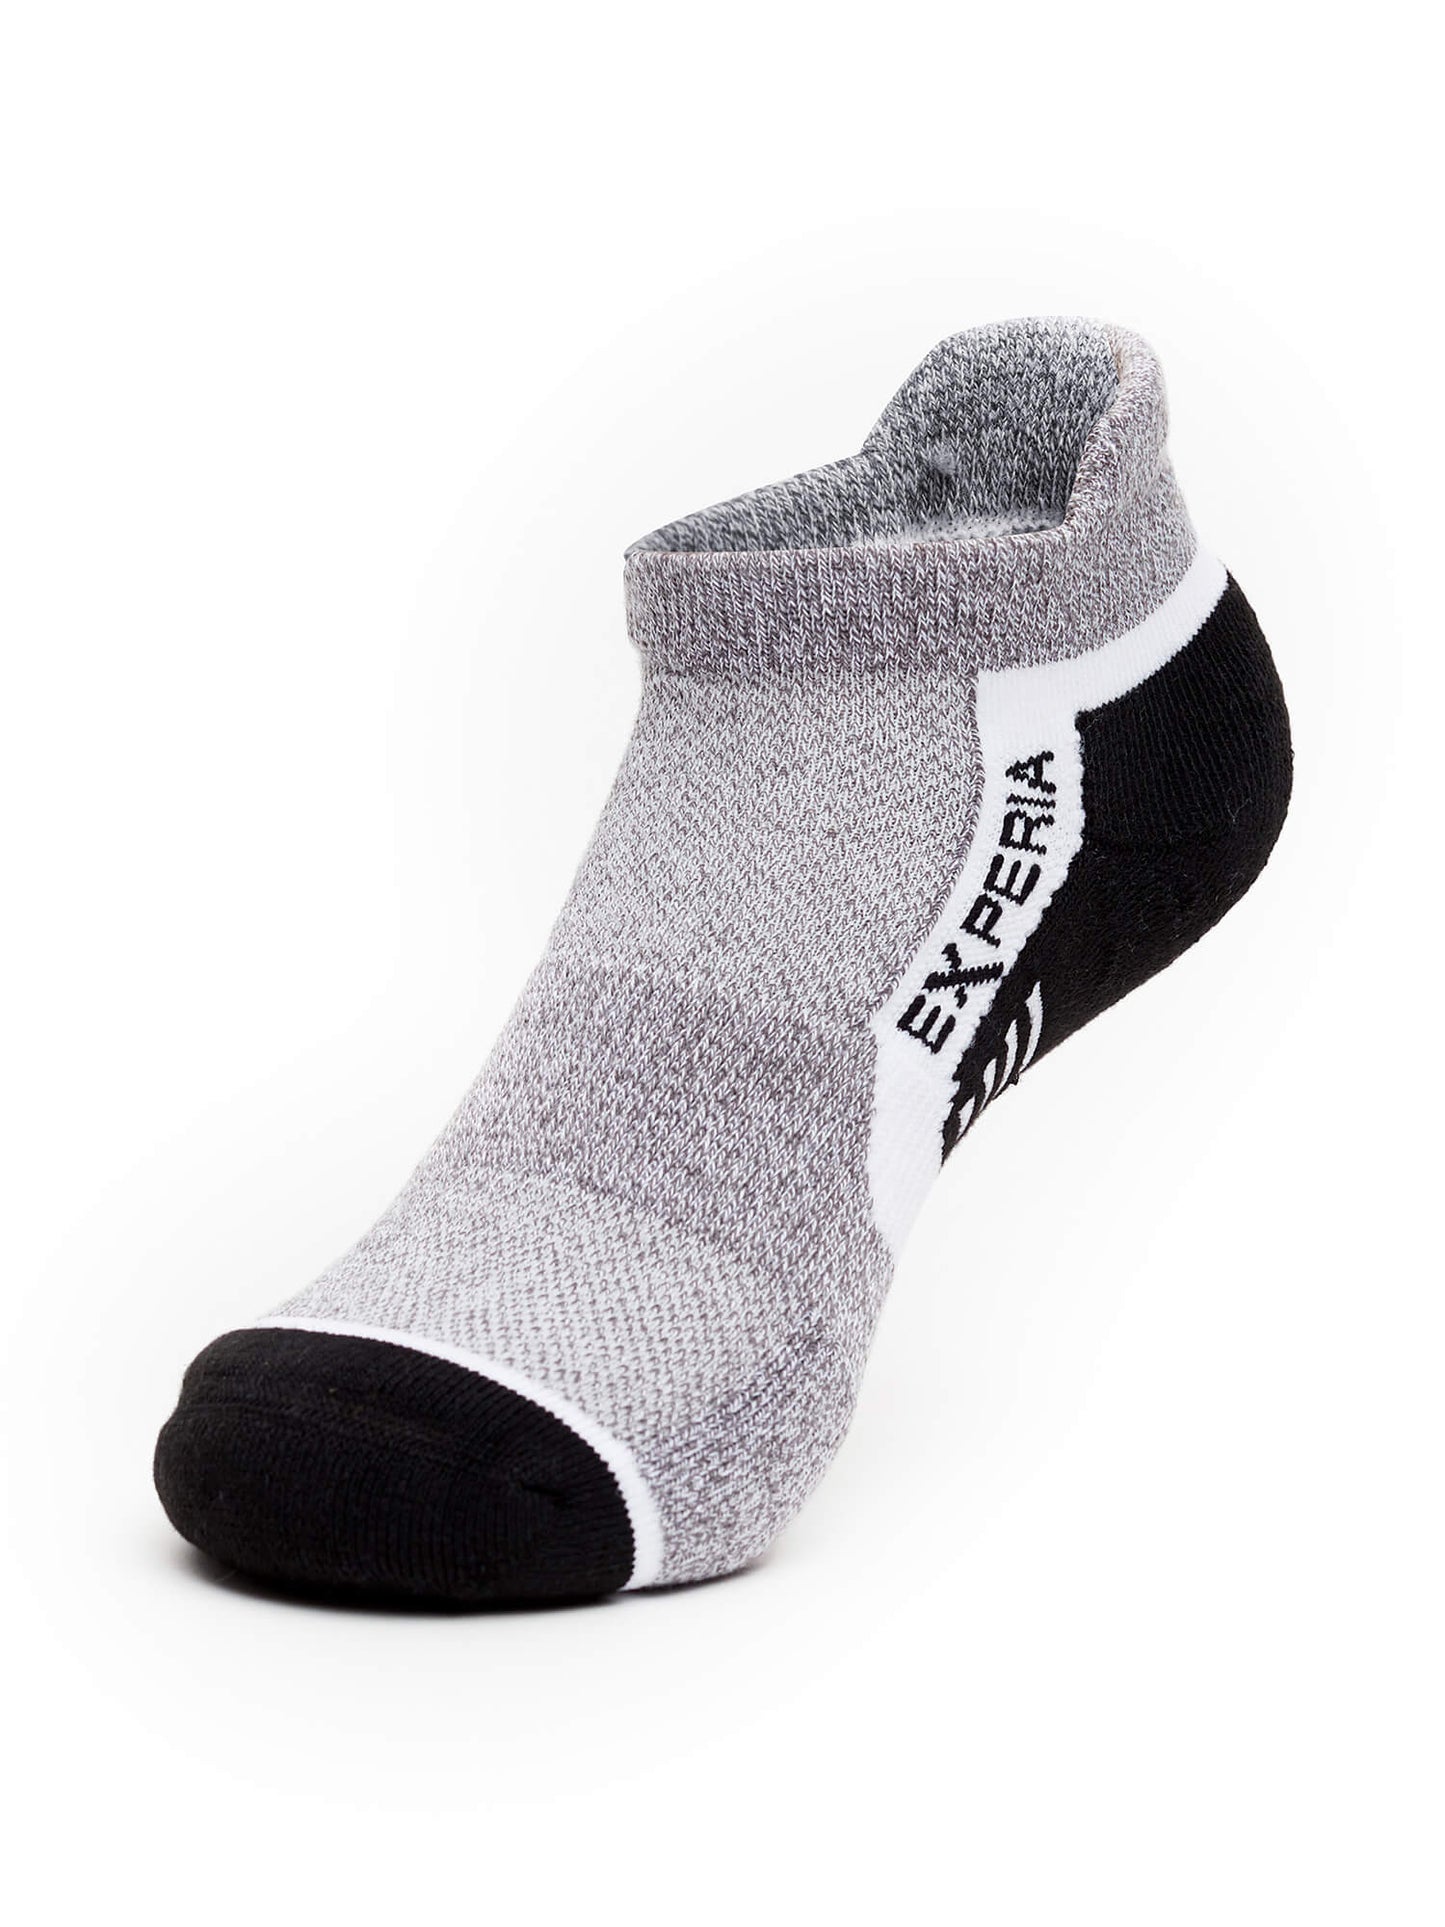 Side of Thorlos Experia Repreve Low Cut Socks in Black